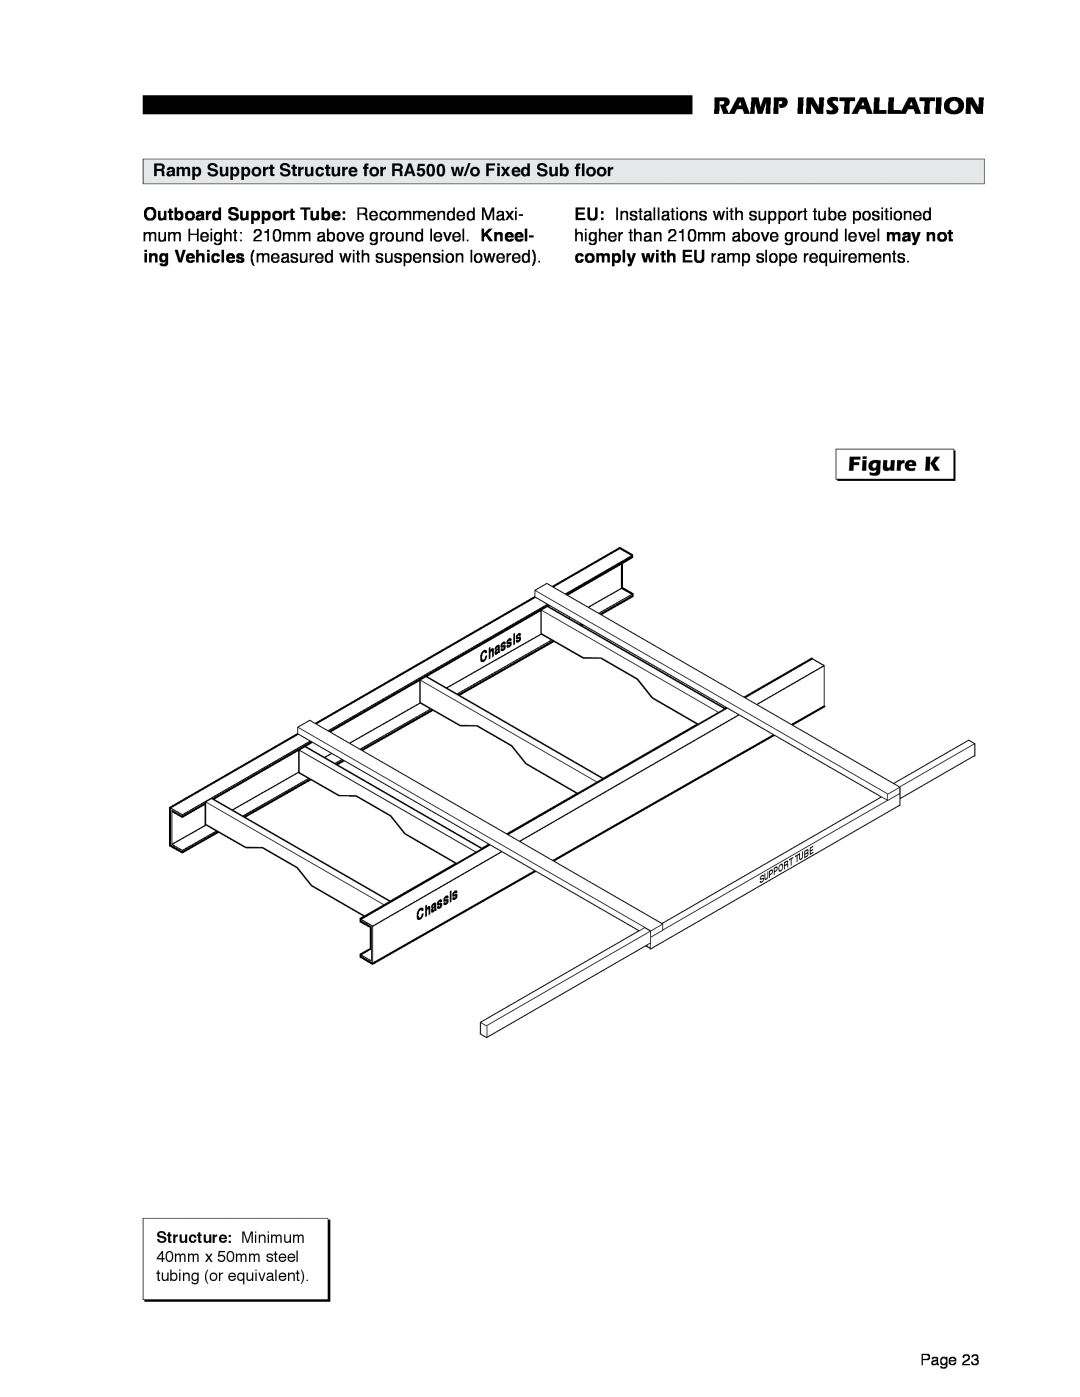 Braun RA500 service manual Figure K, Ramp Installation, Tube Support 